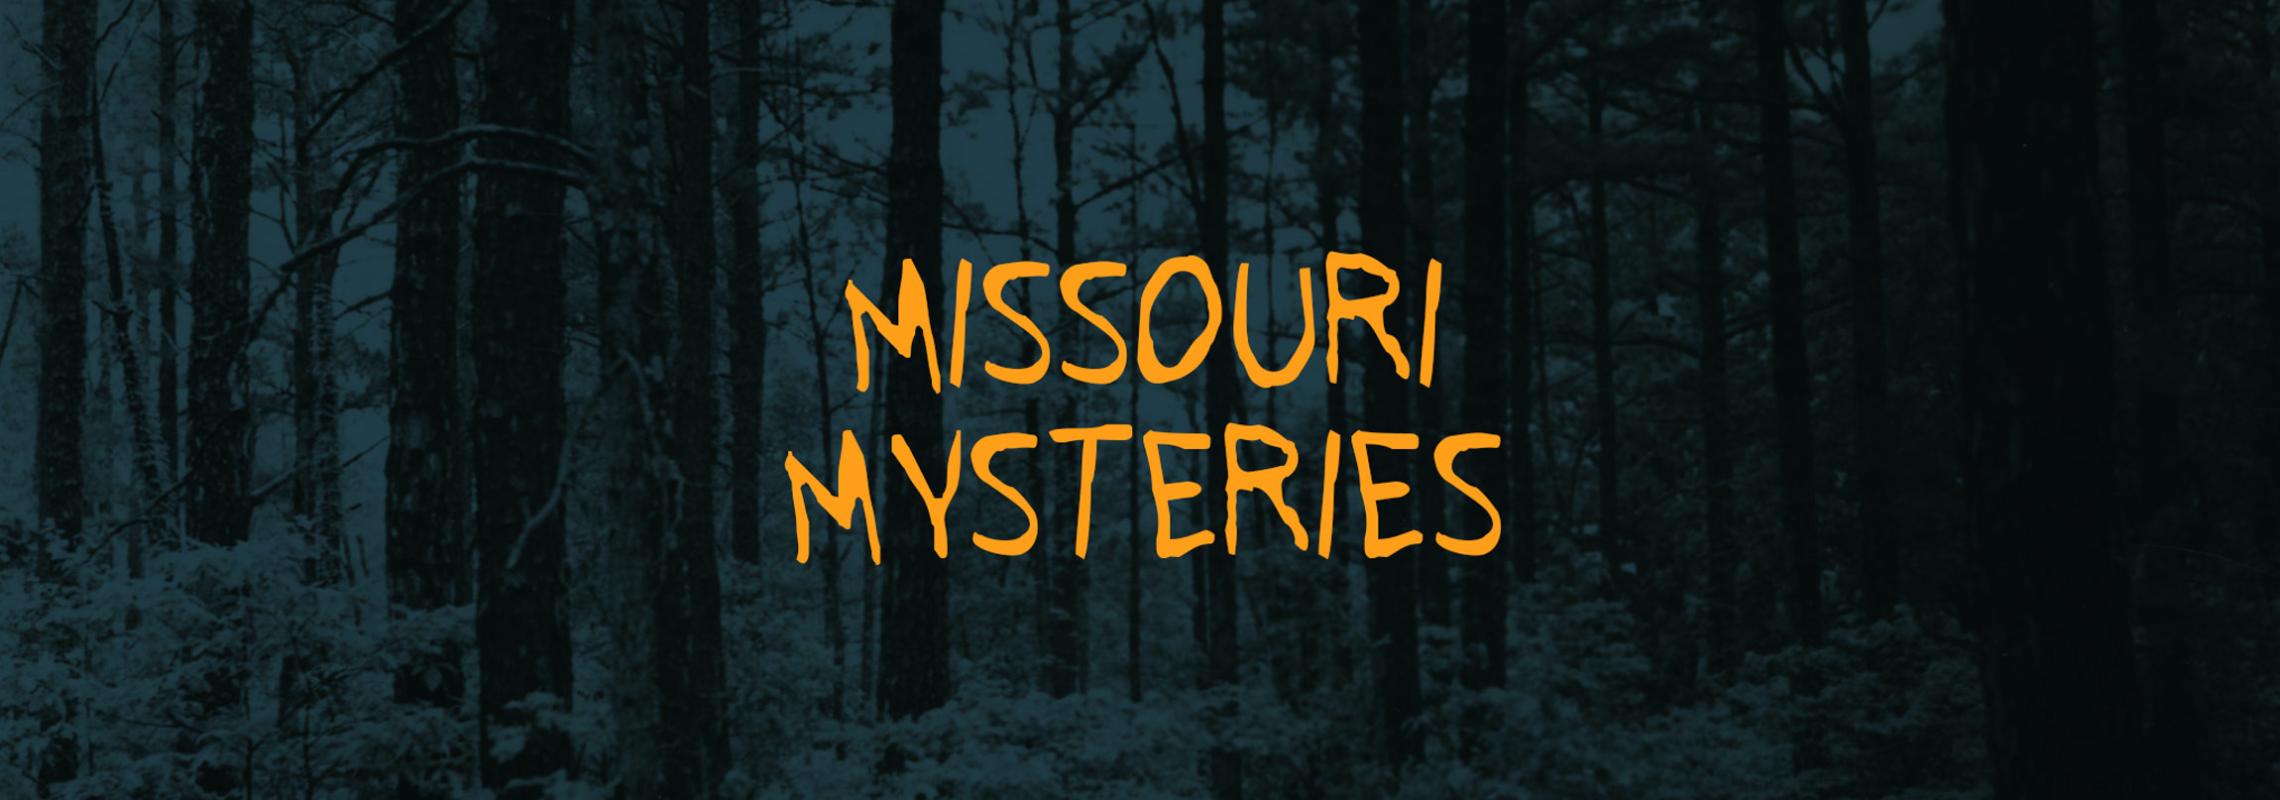 Missouri Mysteries